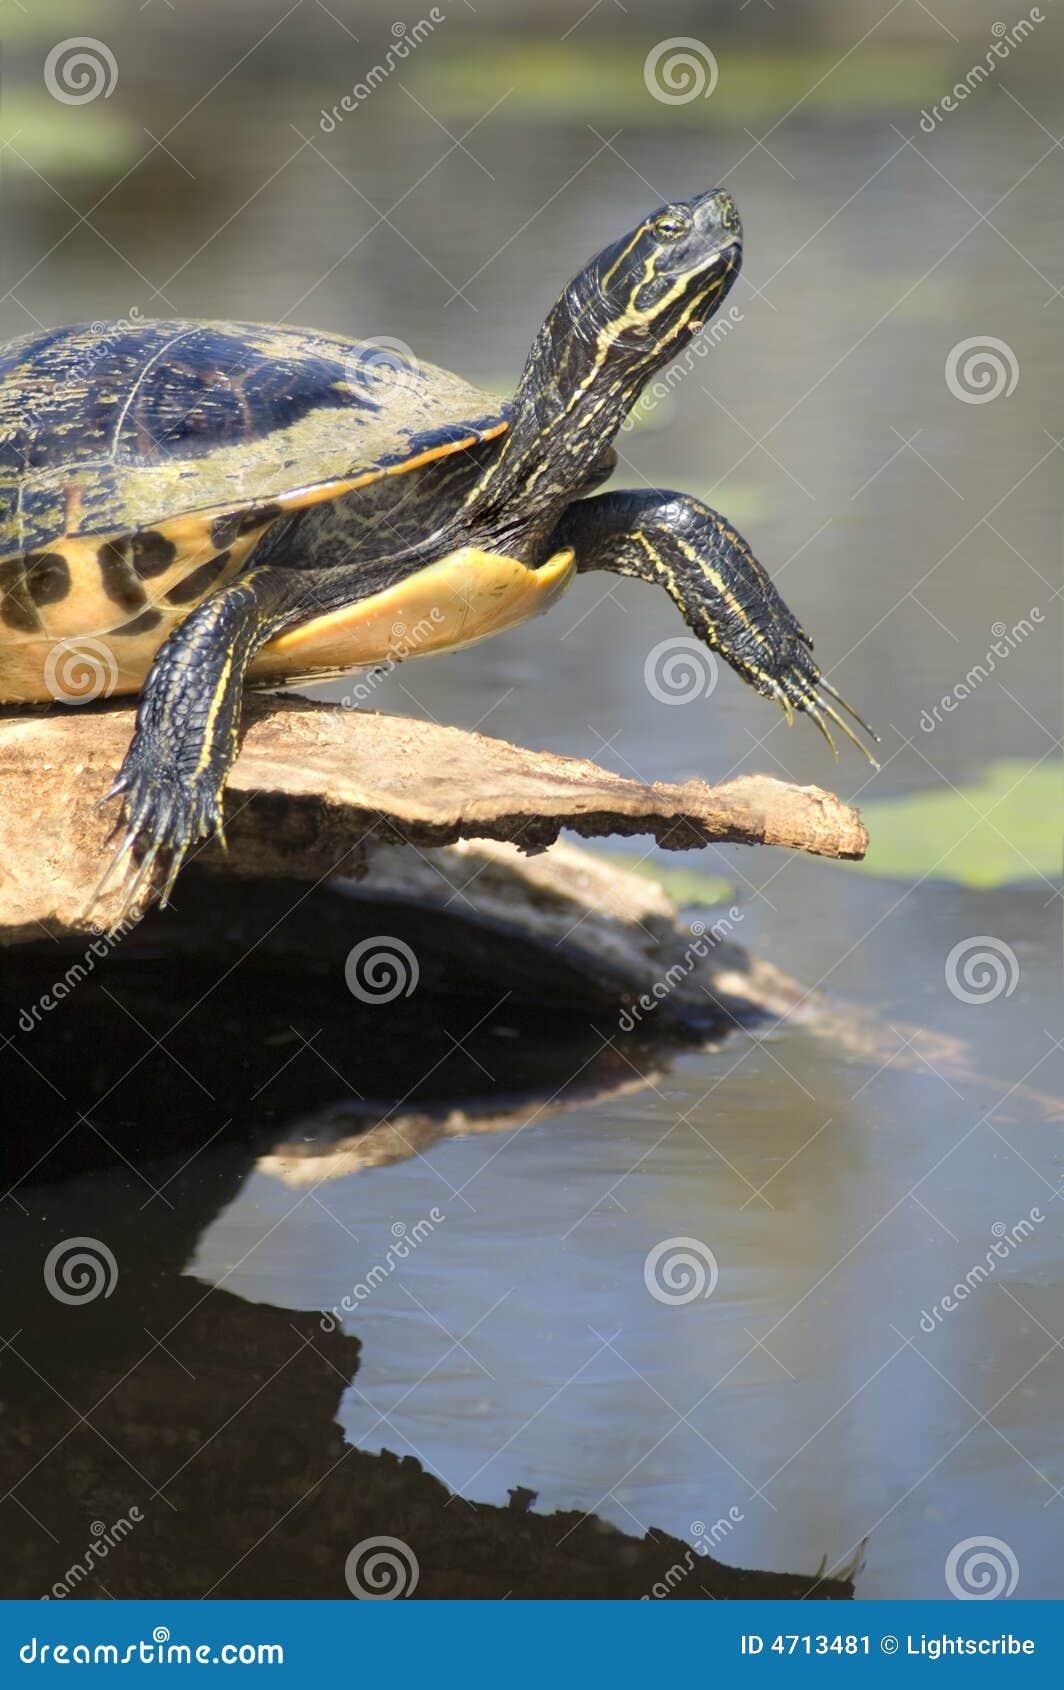 close-up of turtle sunning